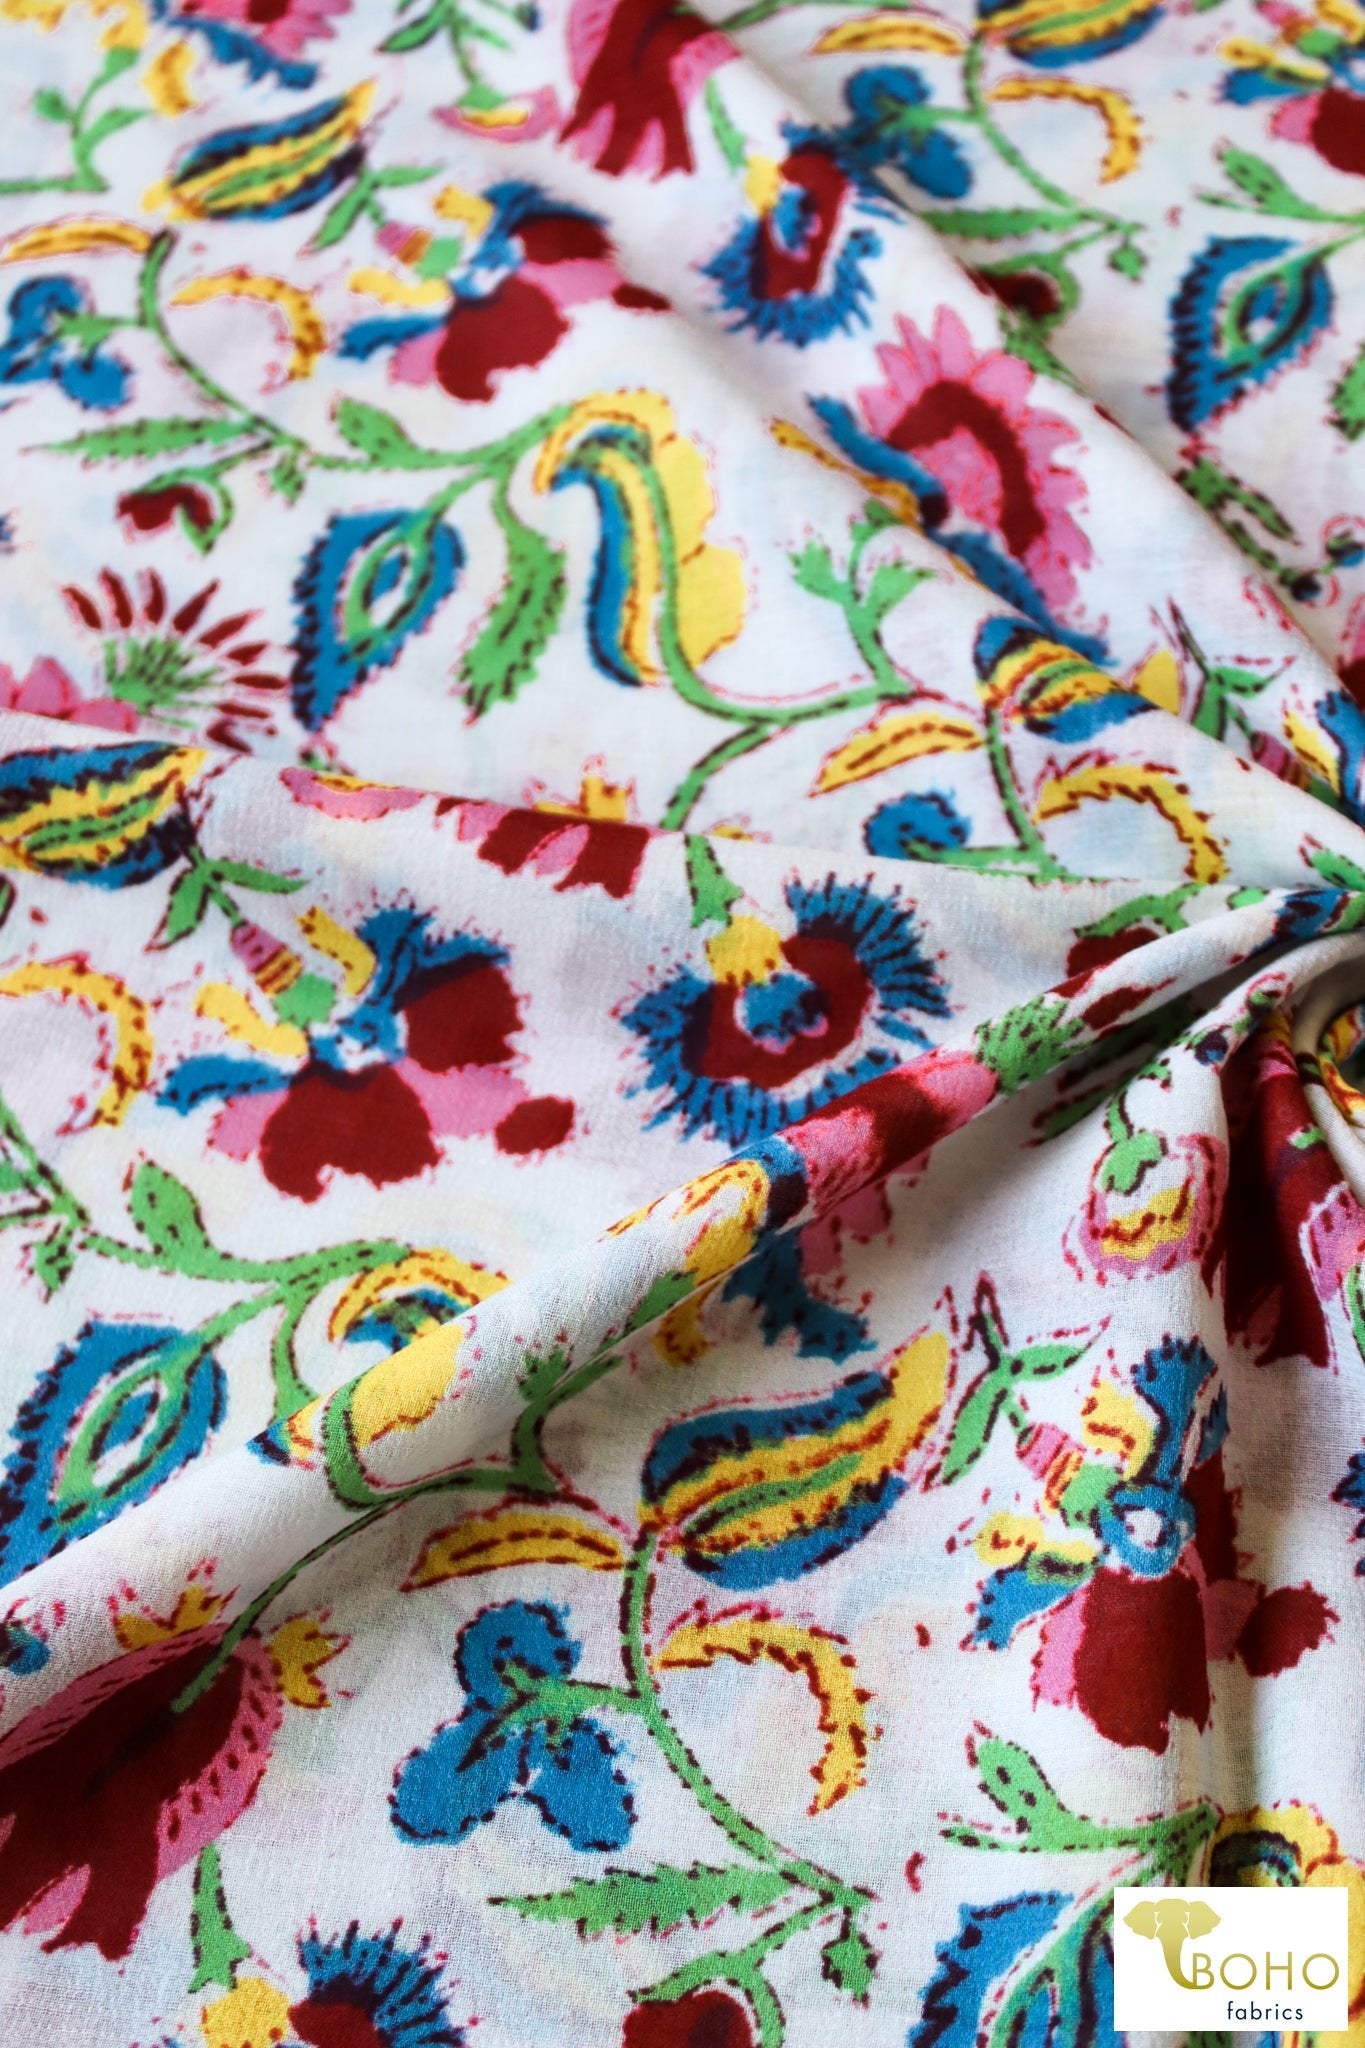 Bloomalicious, Cotton Woven Fabric. WVP-238 - Boho Fabrics